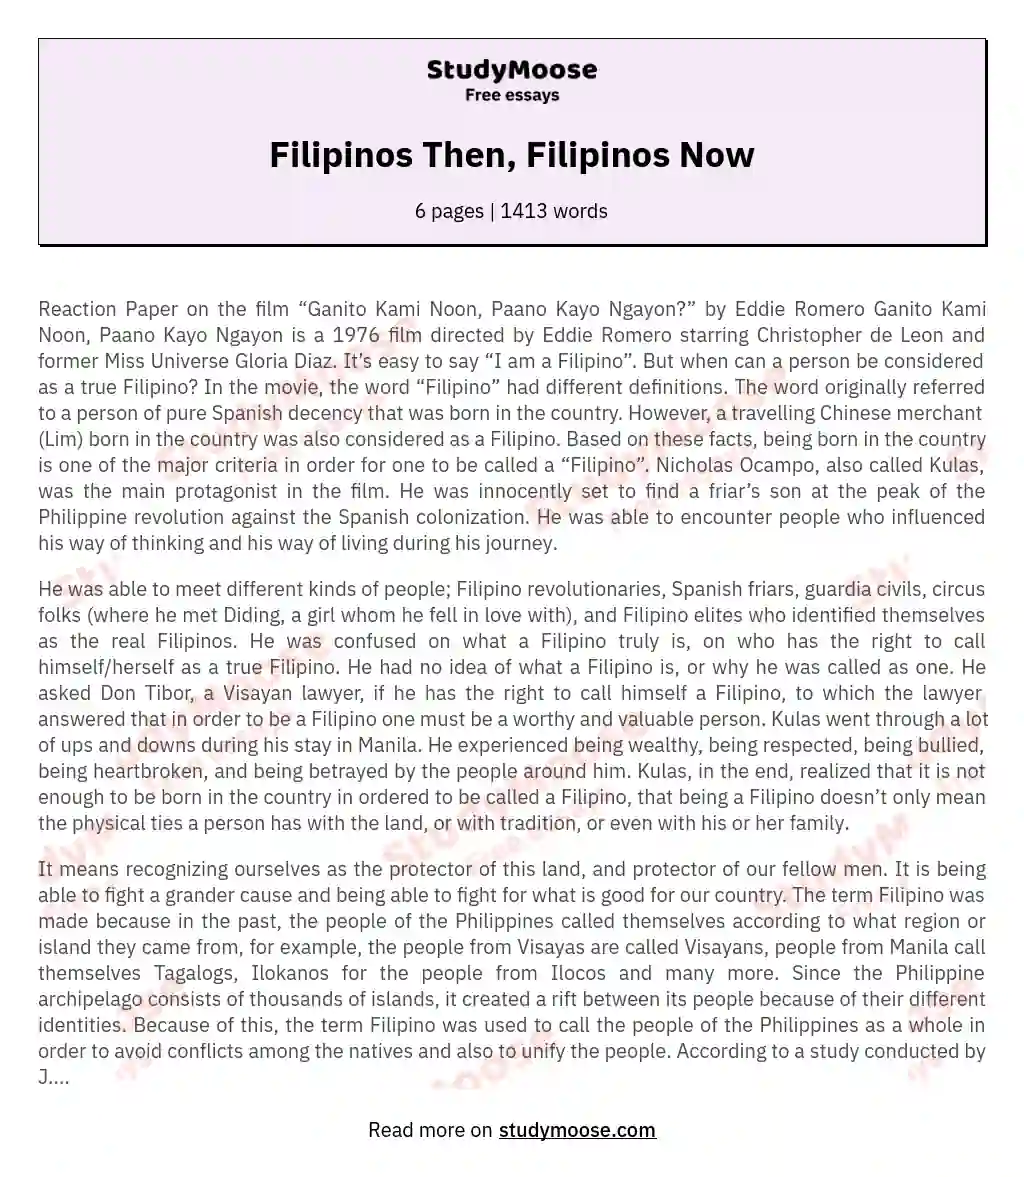 Filipinos Then, Filipinos Now essay